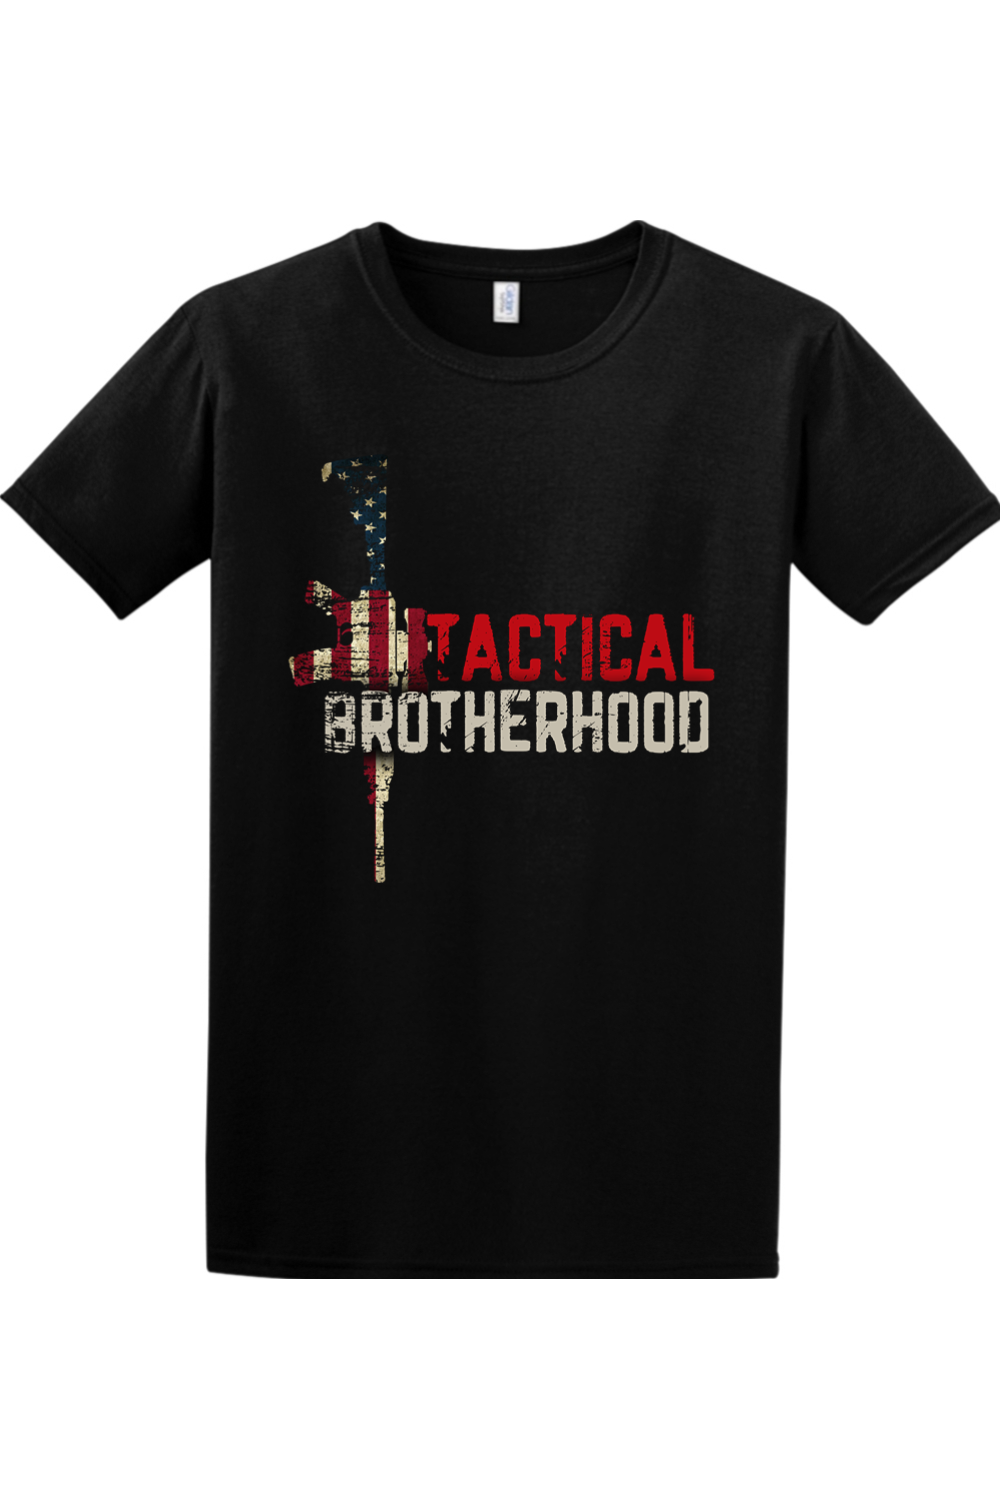 OG 2 - Tactical Brotherhood Official T-Shirt